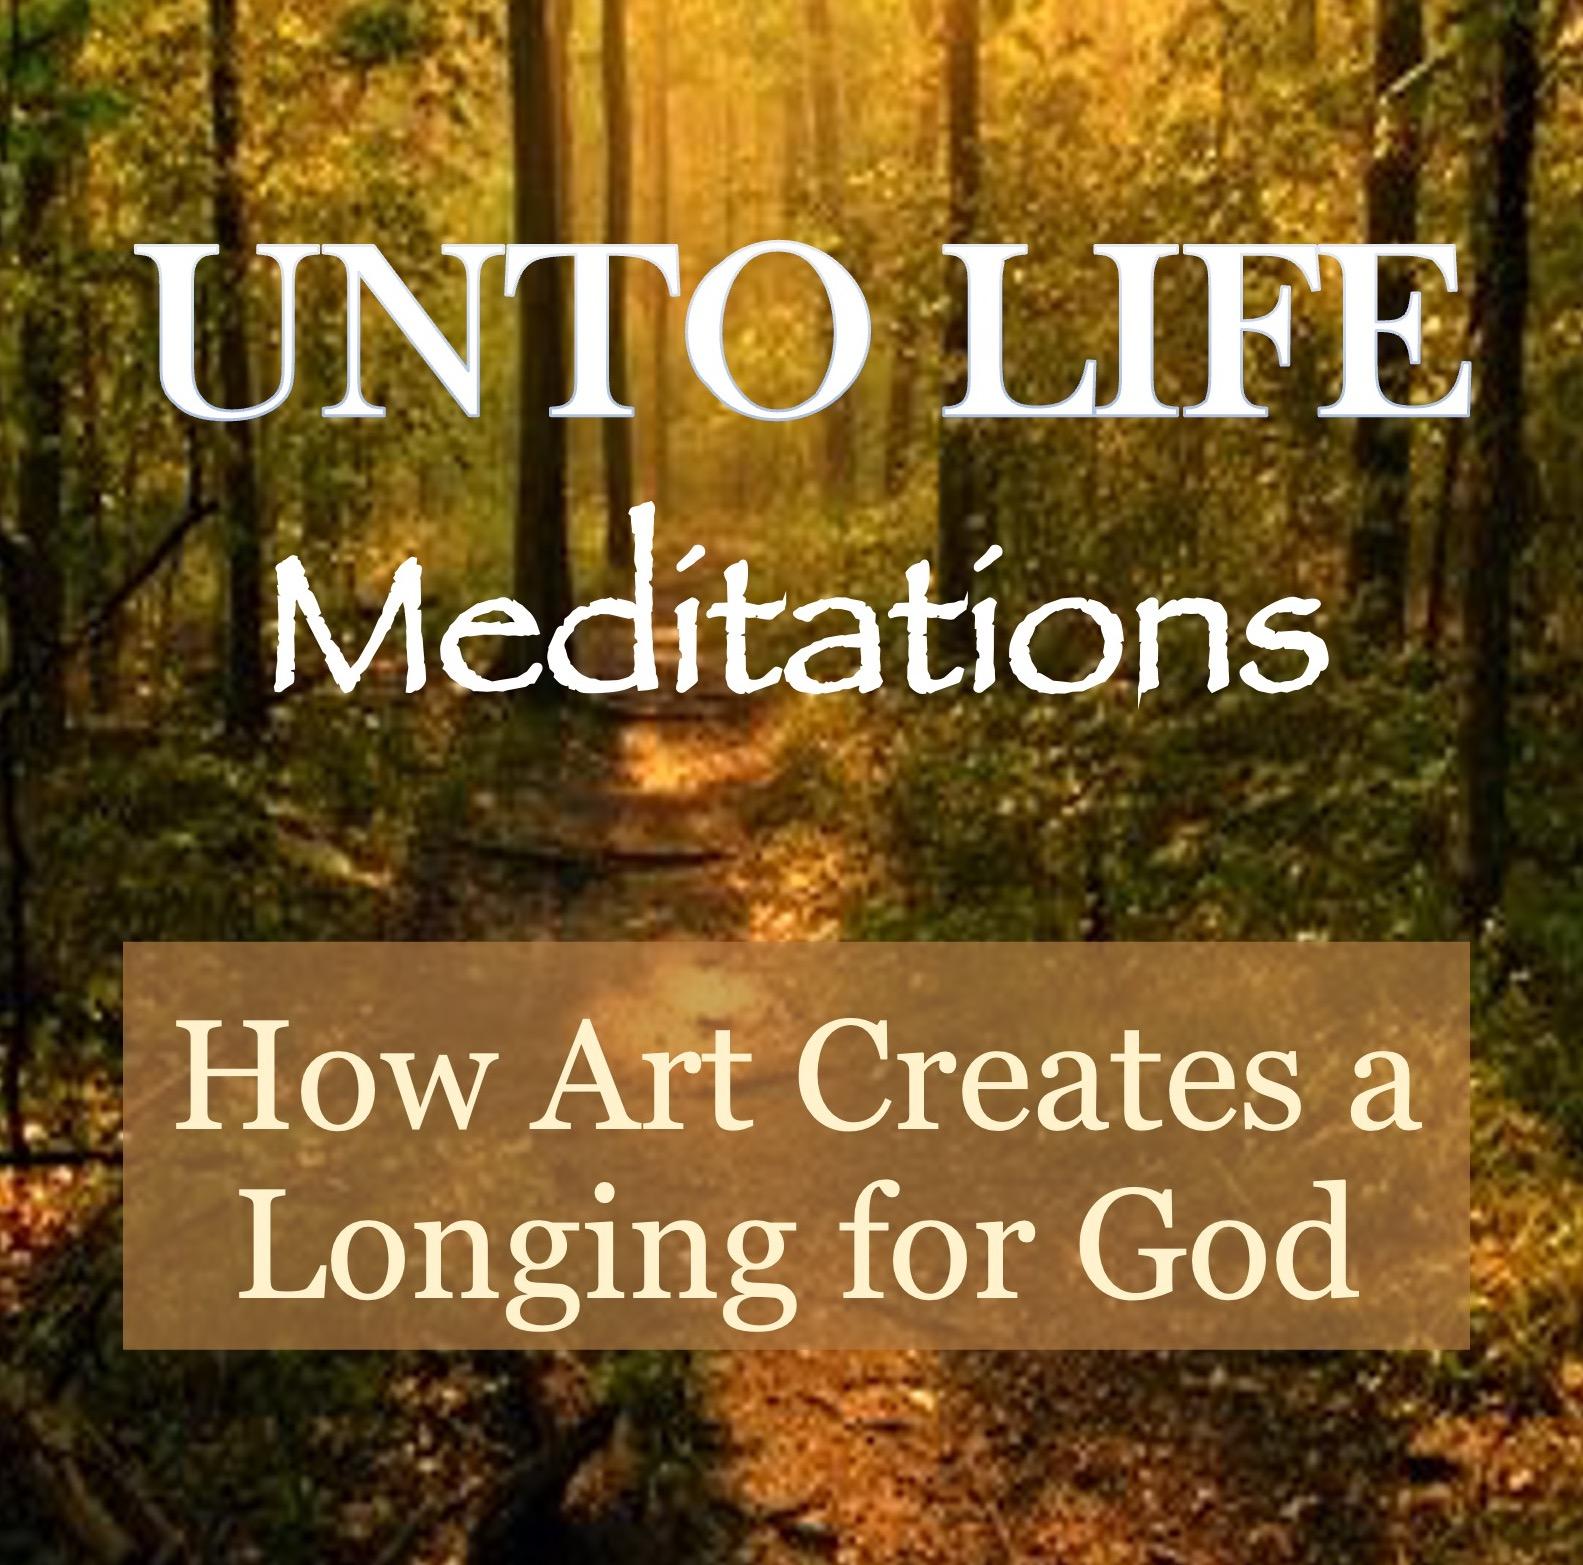 How Art Creates a Longing for God